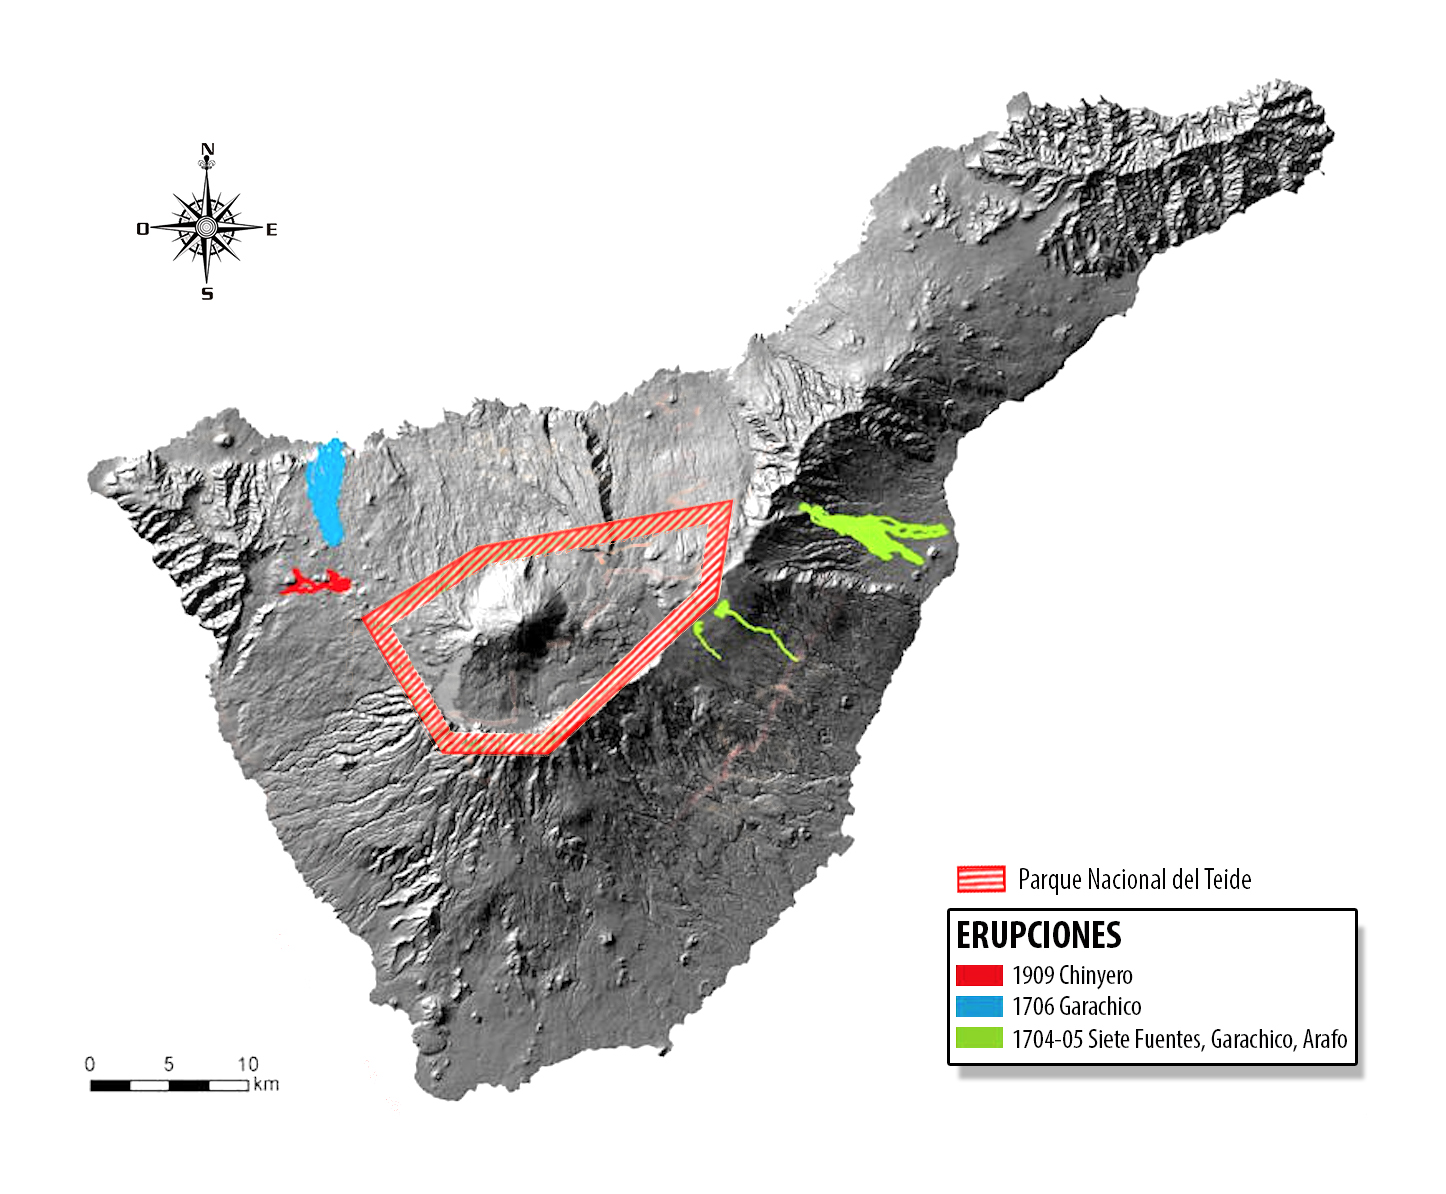 Eruptions on Mount Teide - a history